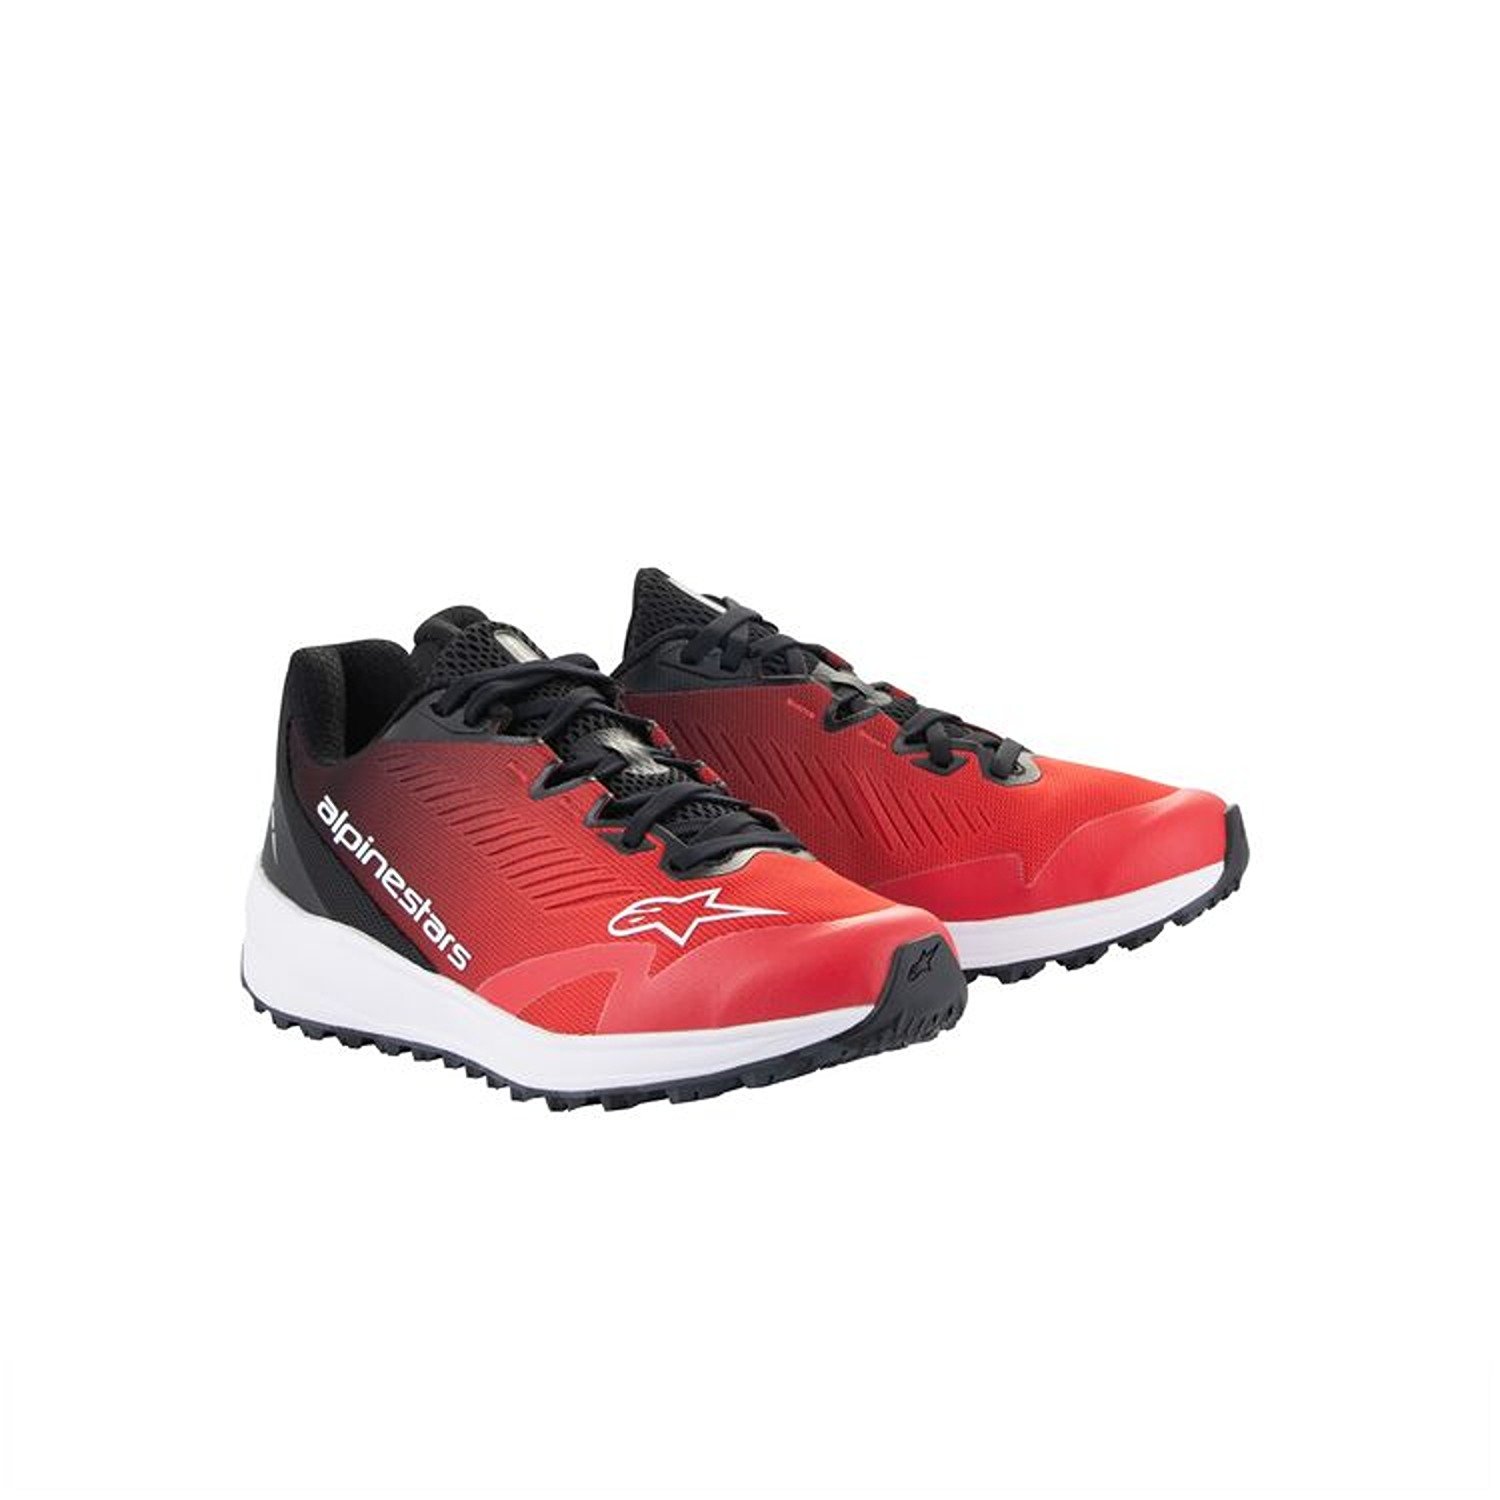 Image of Alpinestars Meta Road V2 Shoes Red Black White Size US 4 ID 8059347383064